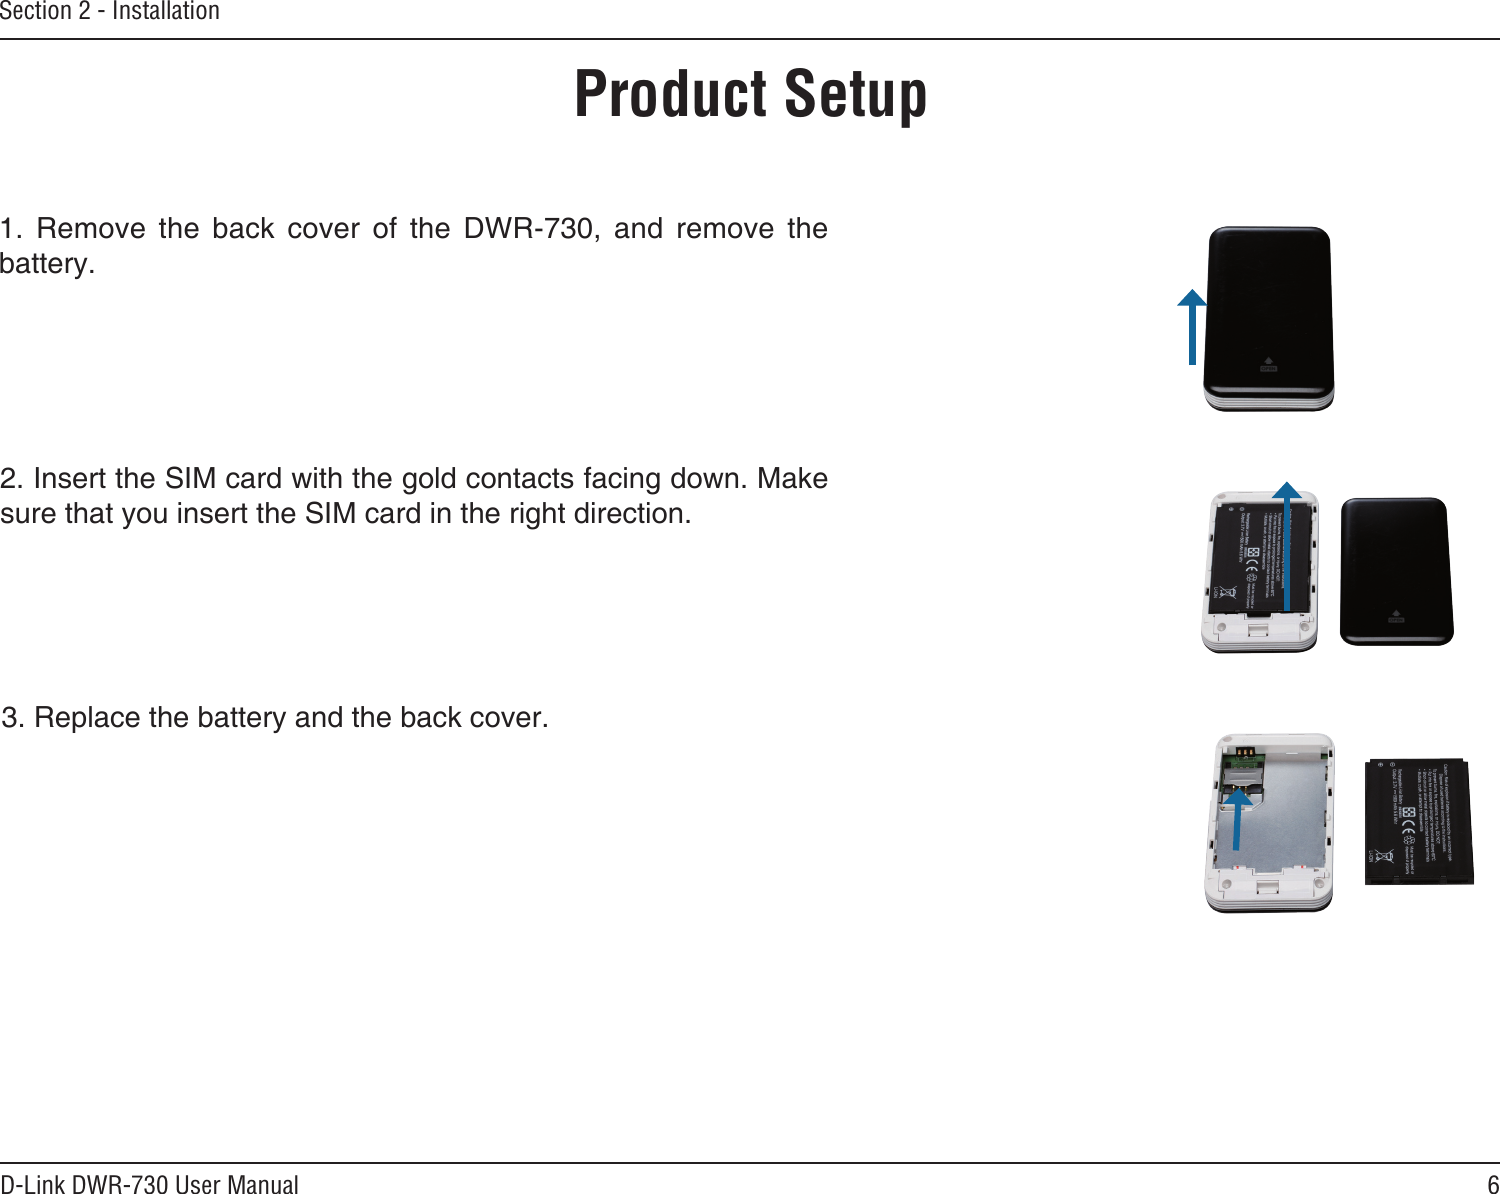 6D-Link DWR-730 User ManualSection 2 - Installation          Product Setup